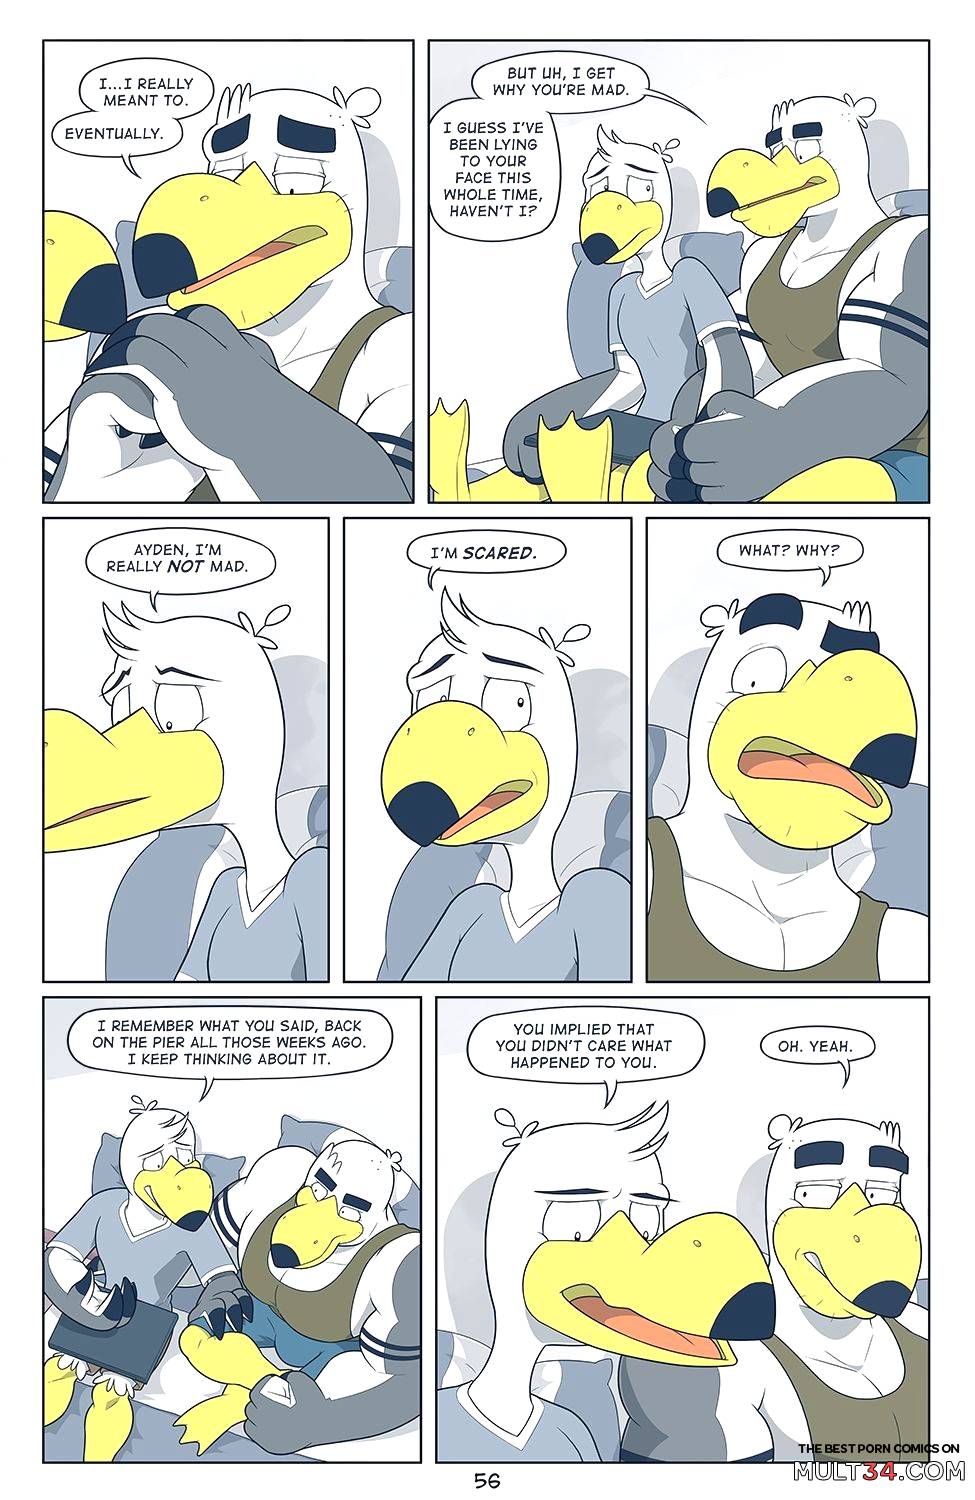 Brogulls page 57